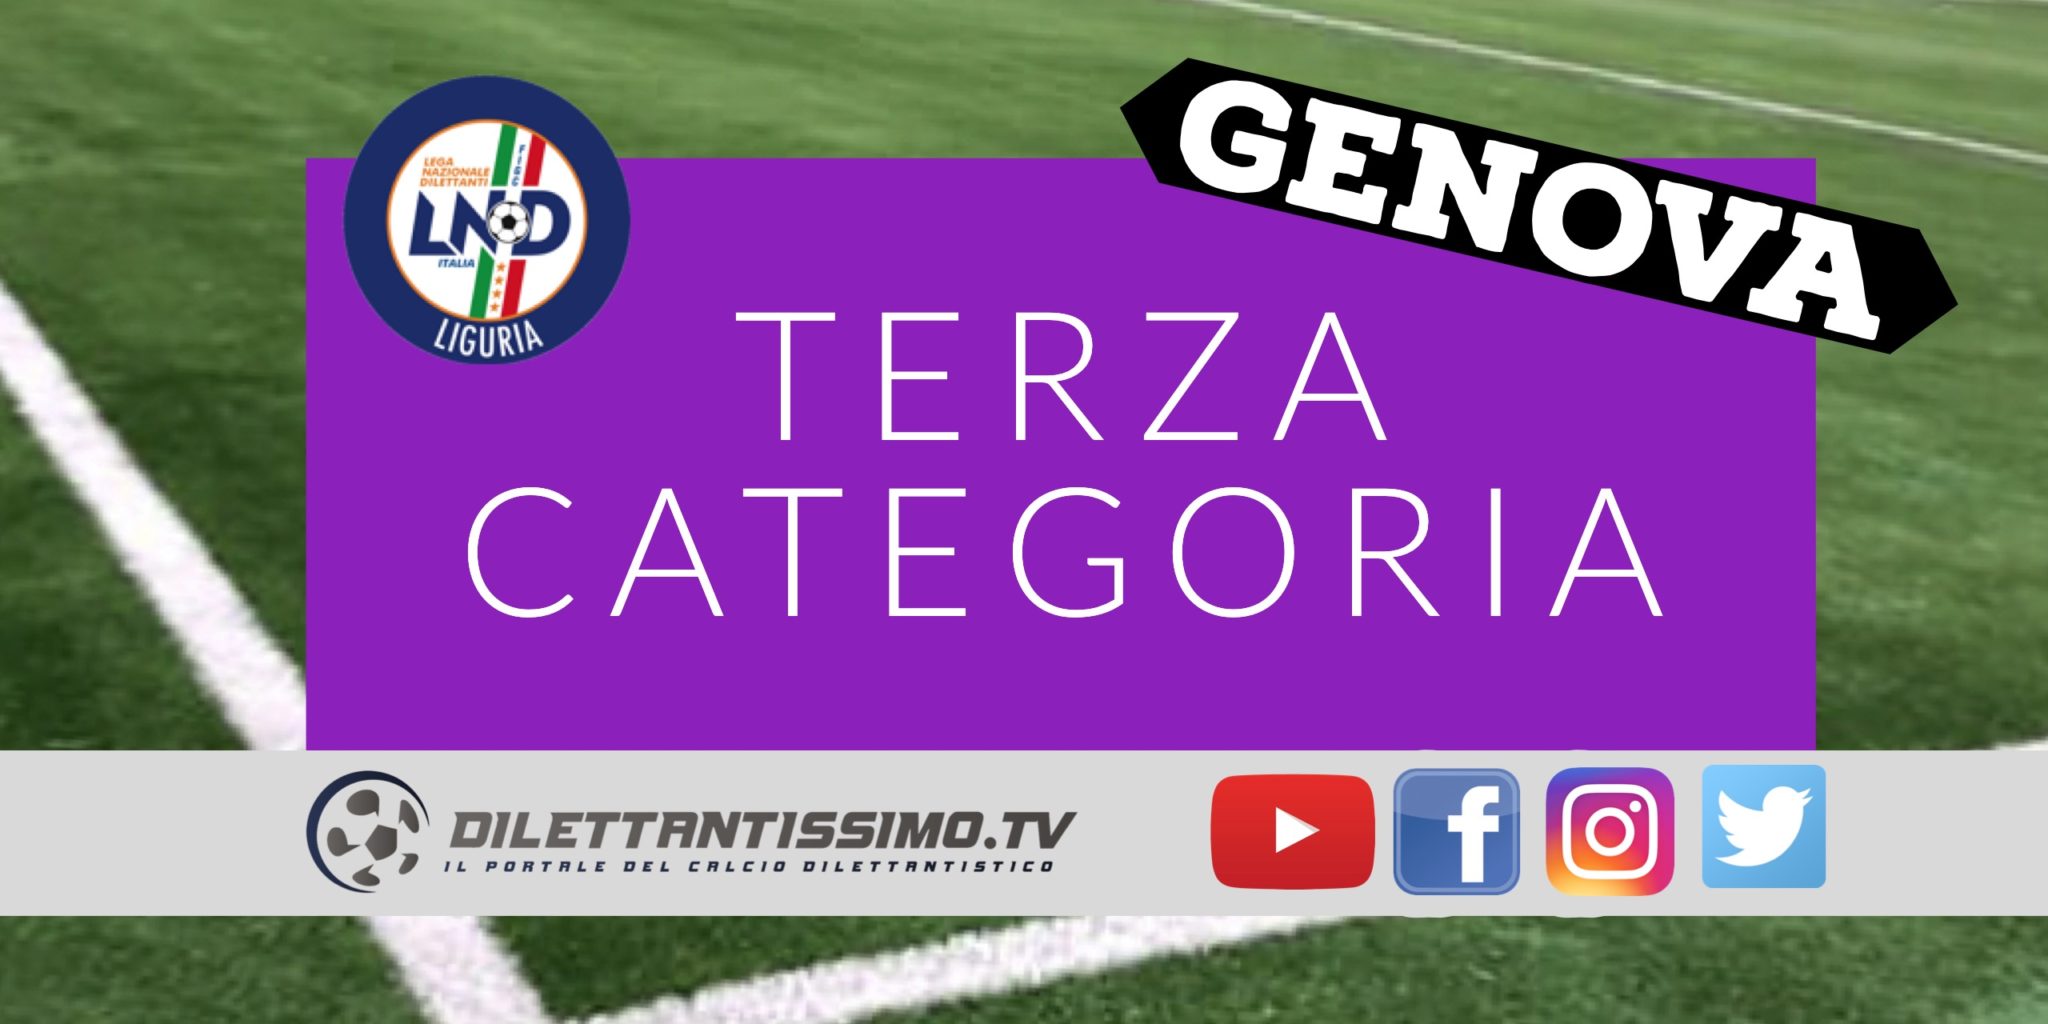 DIRETTA LIVE – TERZA CATEGORIA, 13ª GIORNATA